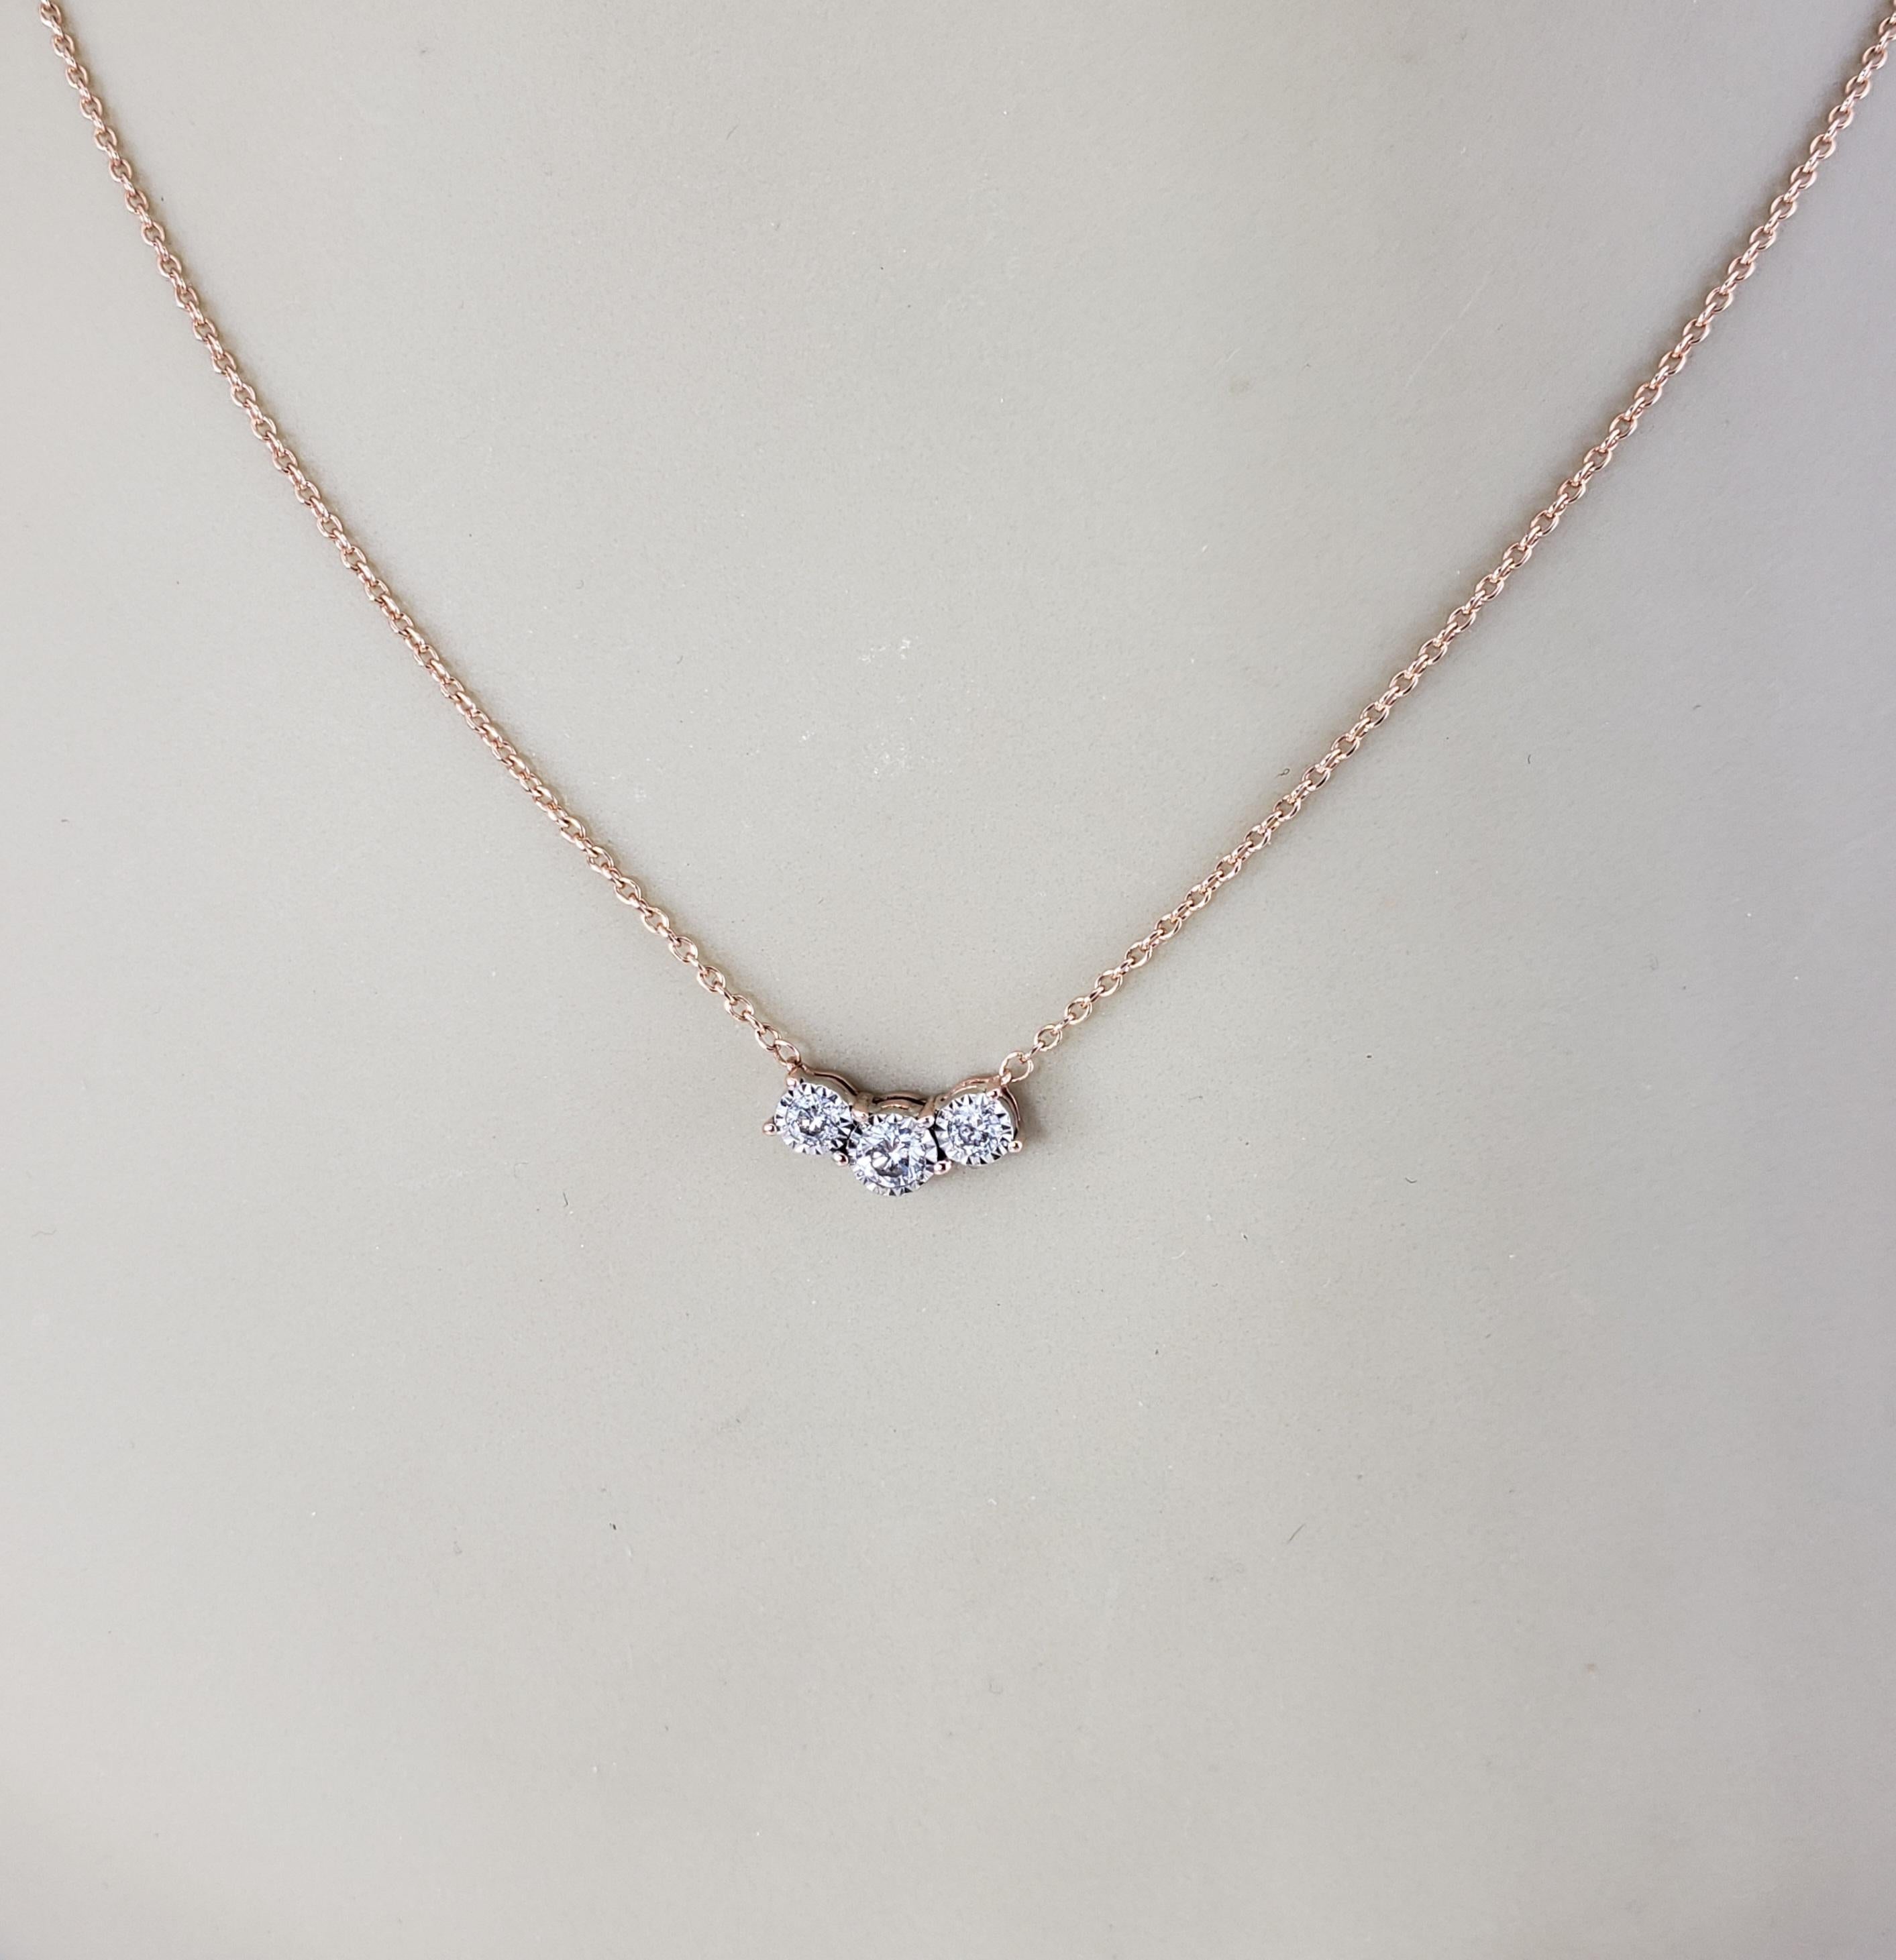 10 Karat Rose Gold Three Diamond Pendant Necklace #16627 For Sale 2